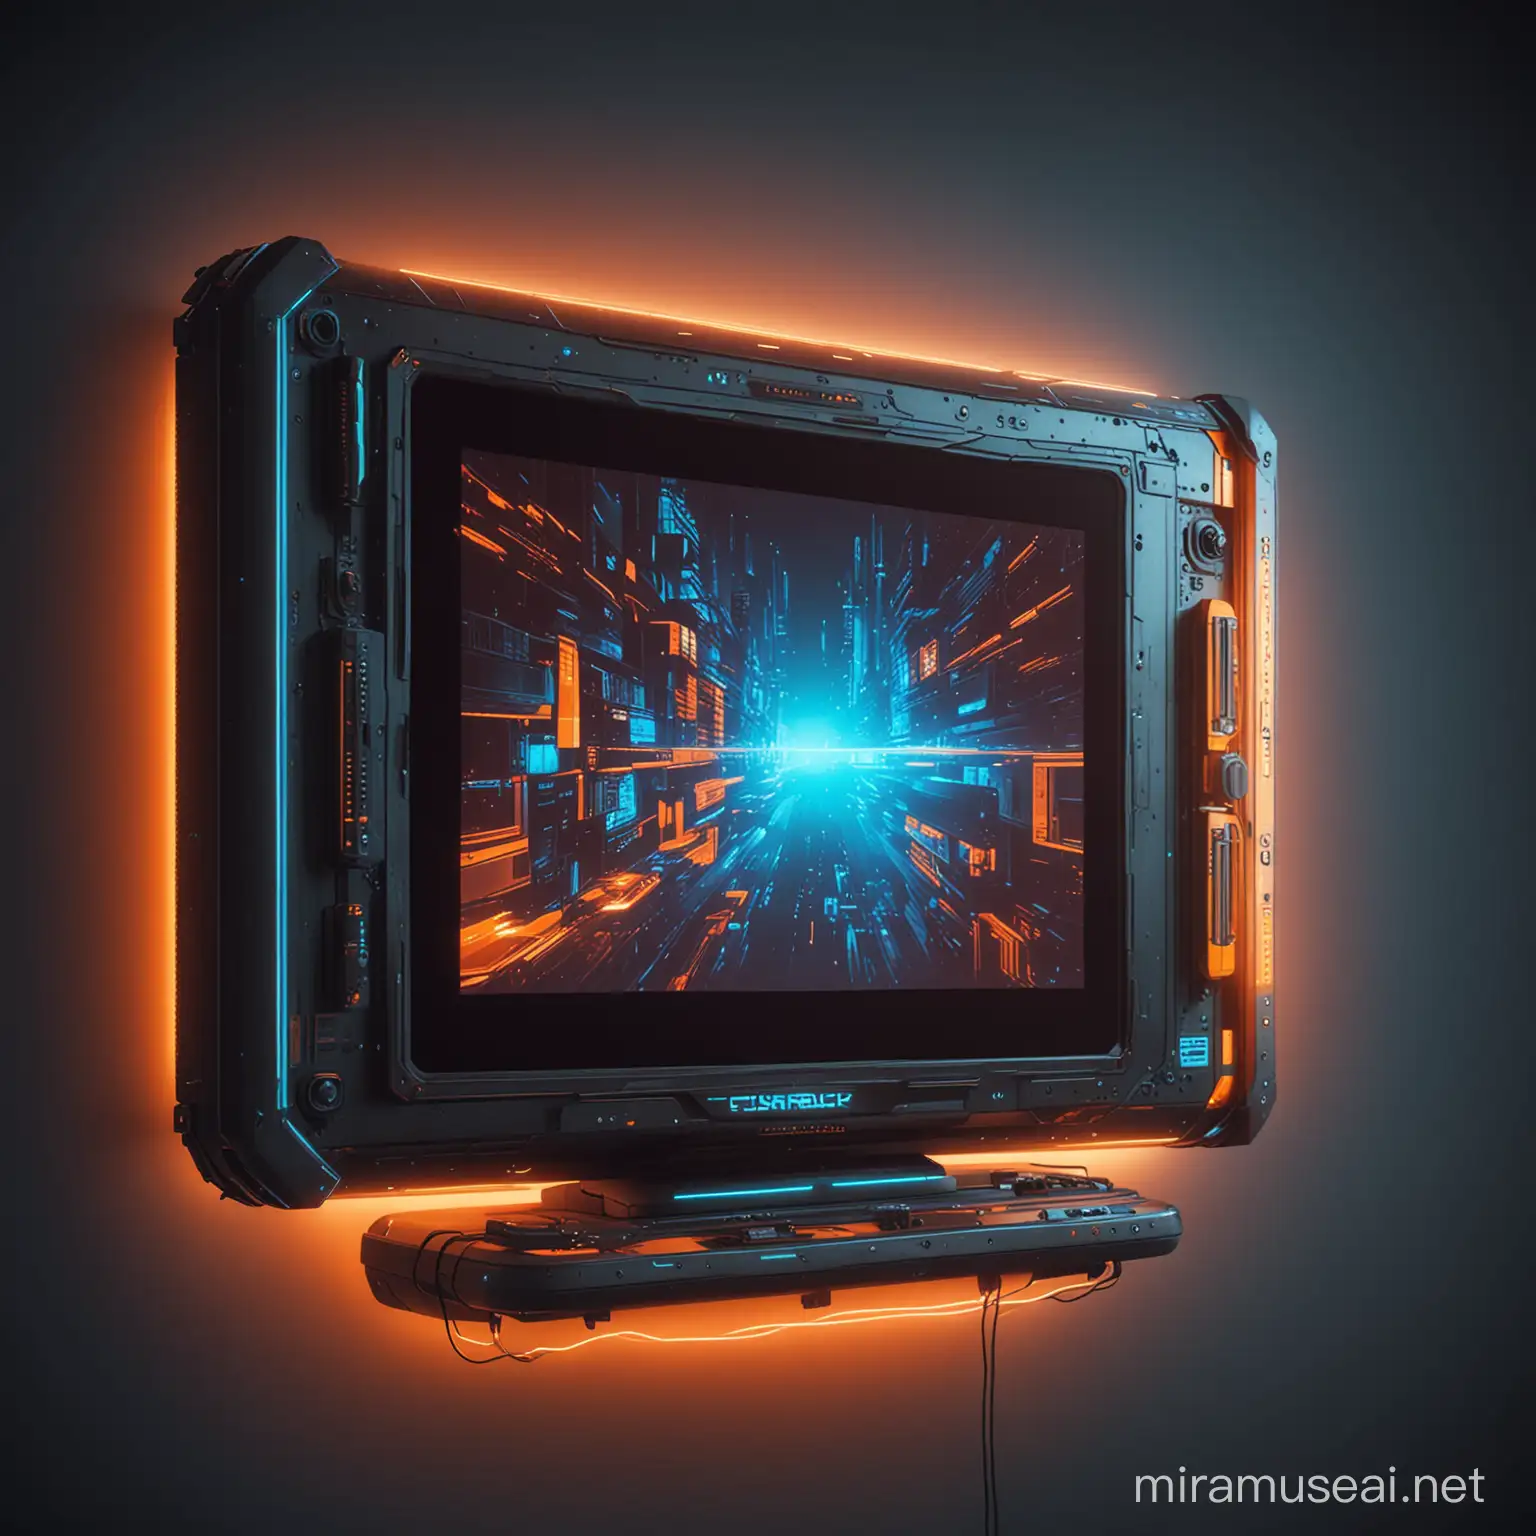 cyberpunk big screen tv floating, three quater view, orange and blue hue